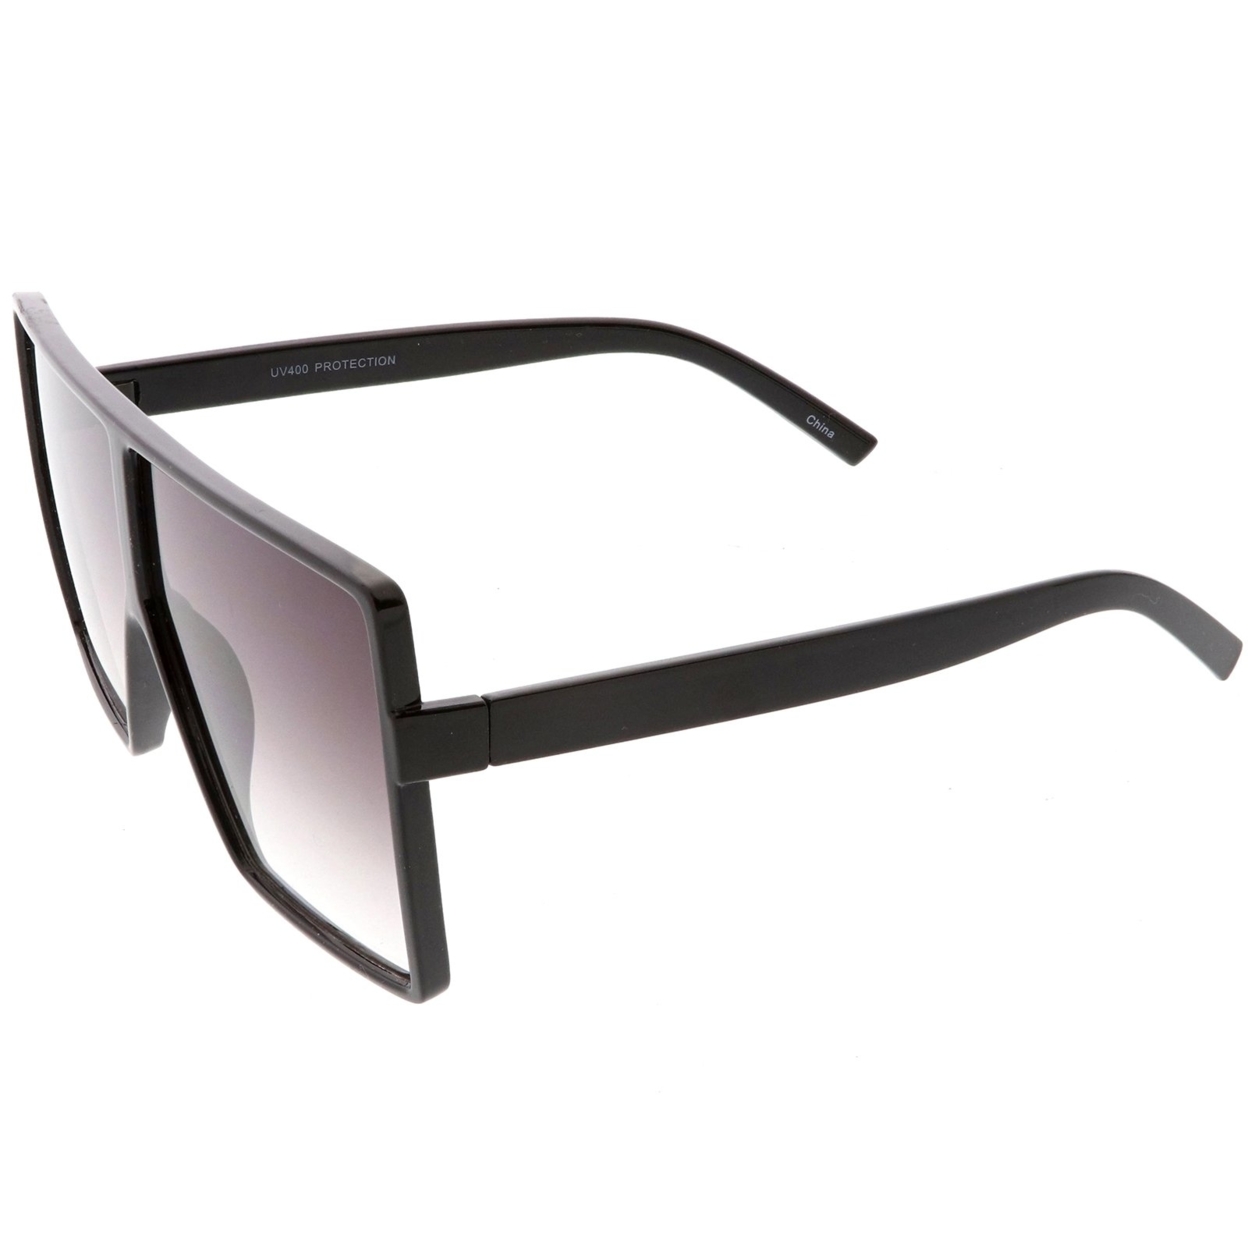 Super Oversize Square Sunglasses Flat Top Neutral Color Flat Lens 69mm - Matte Black / Smoke